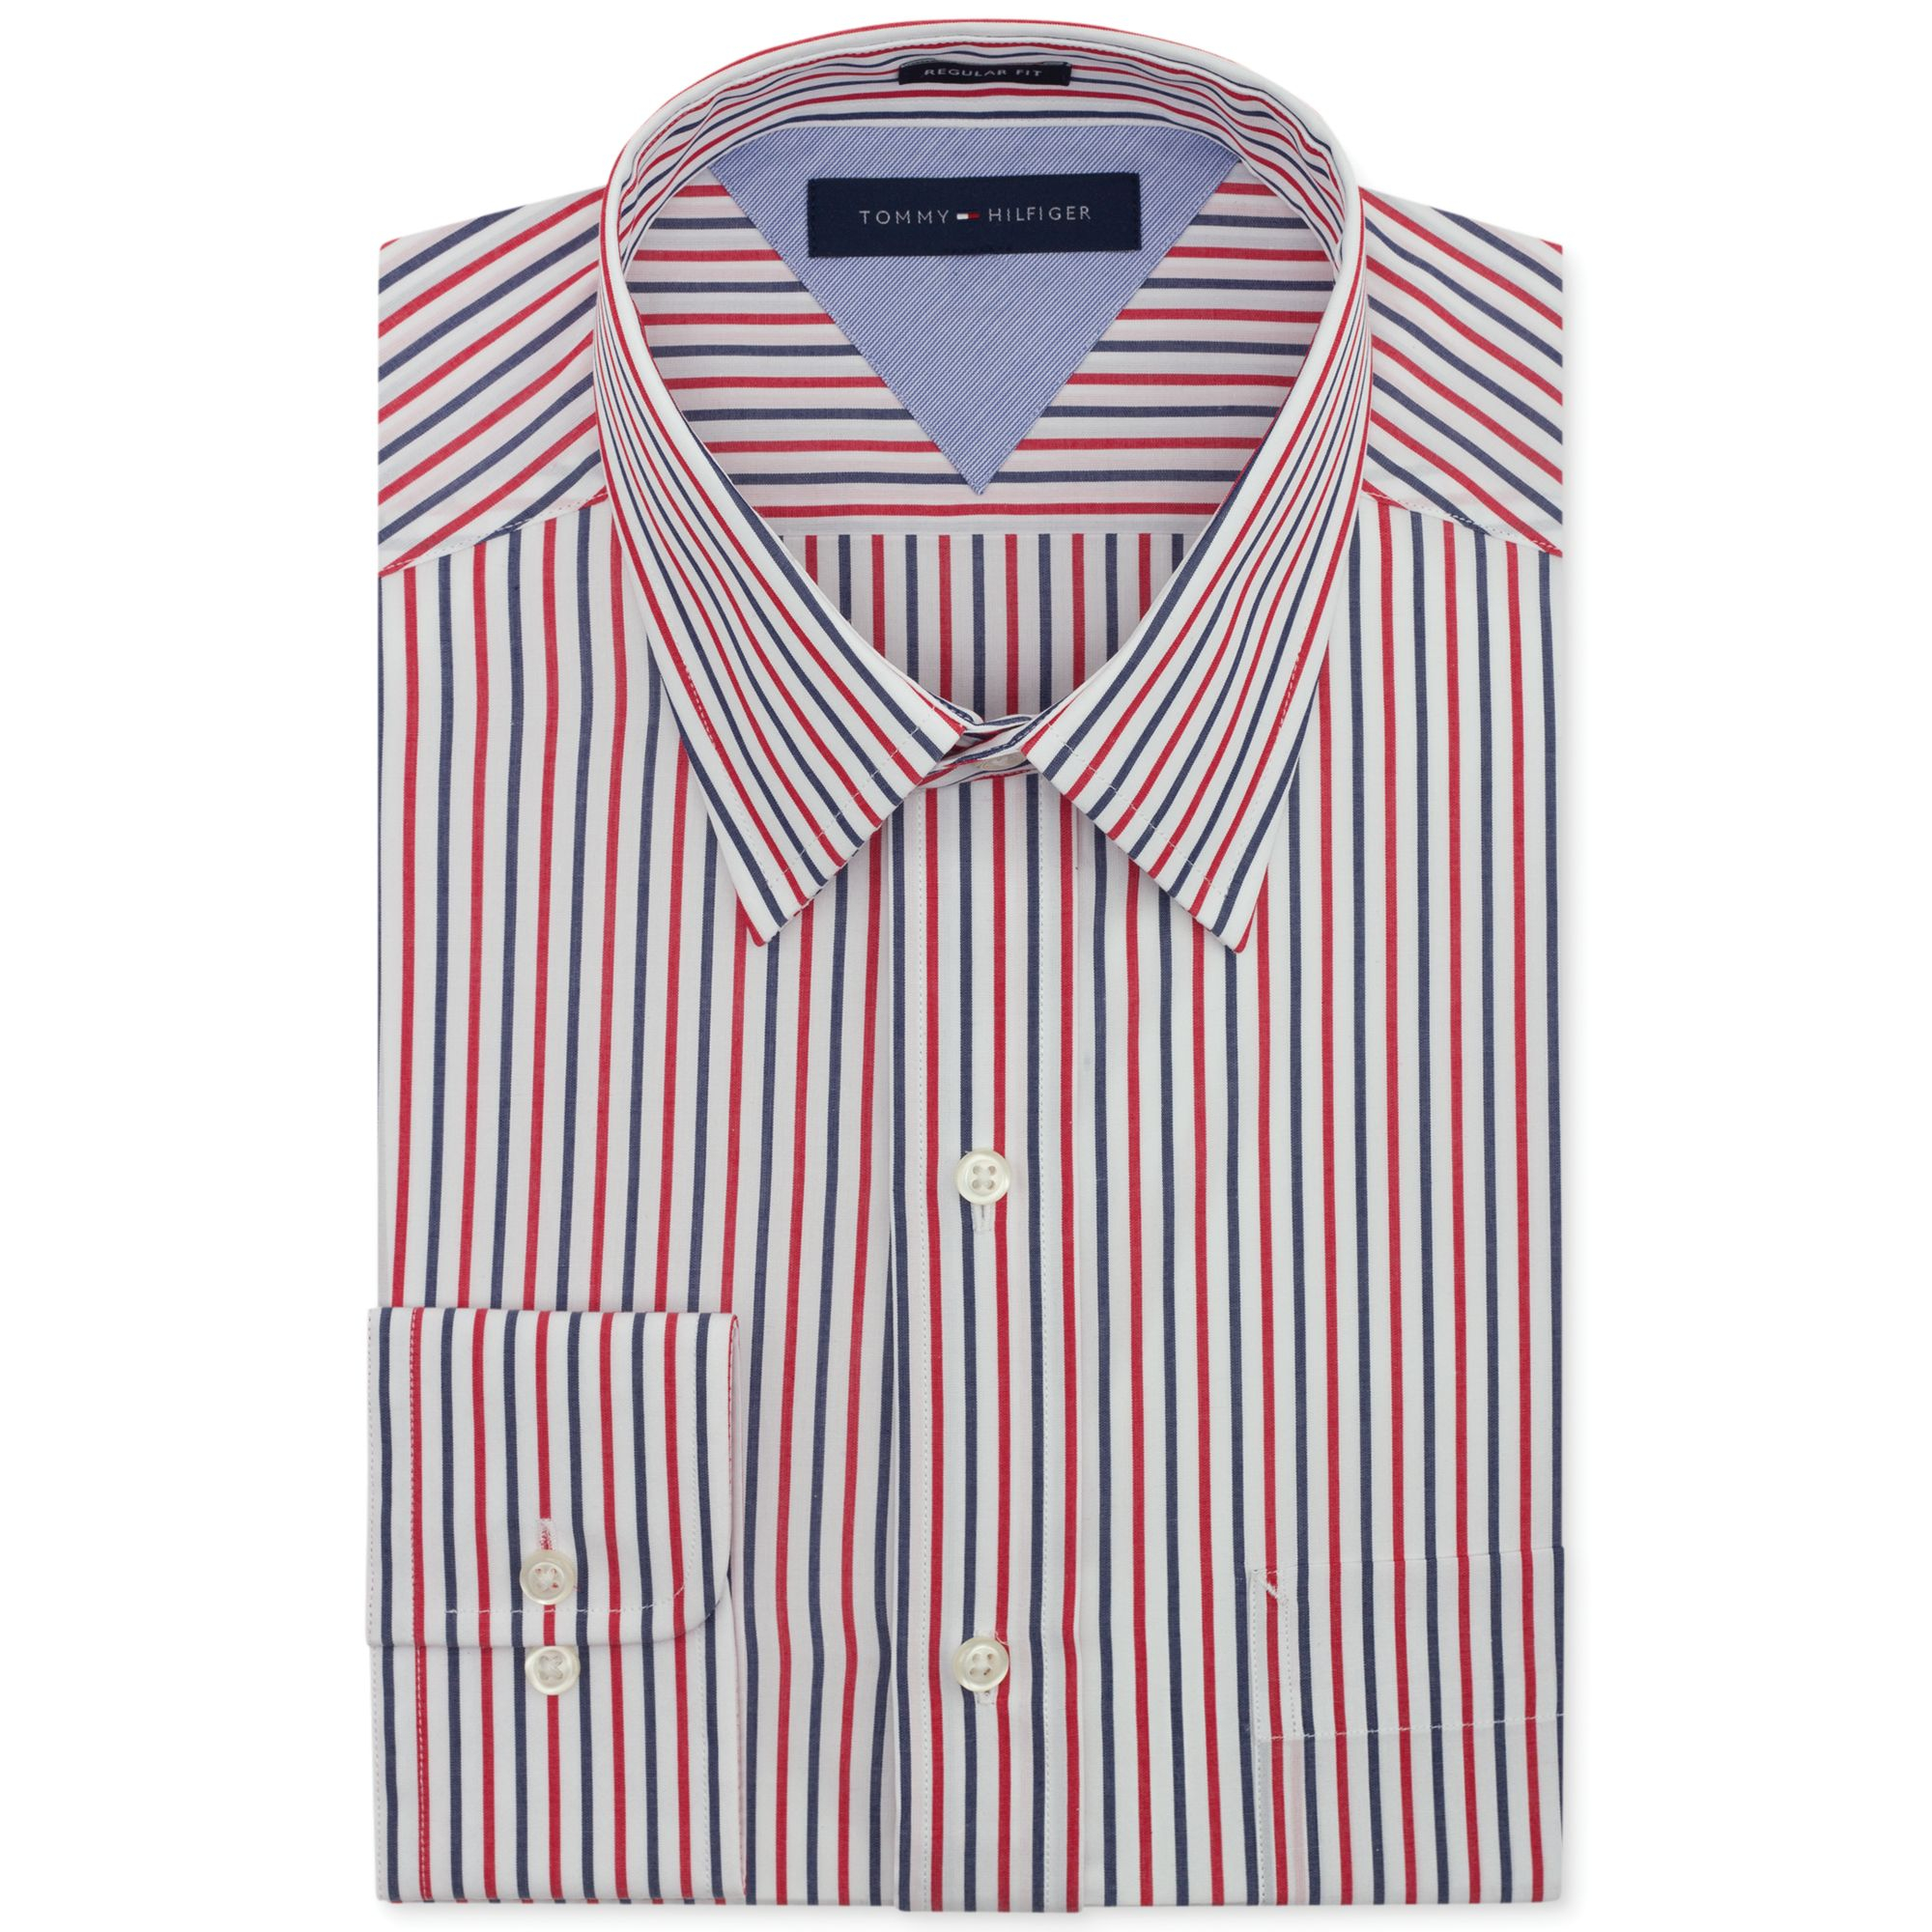 tommy hilfiger red striped shirt